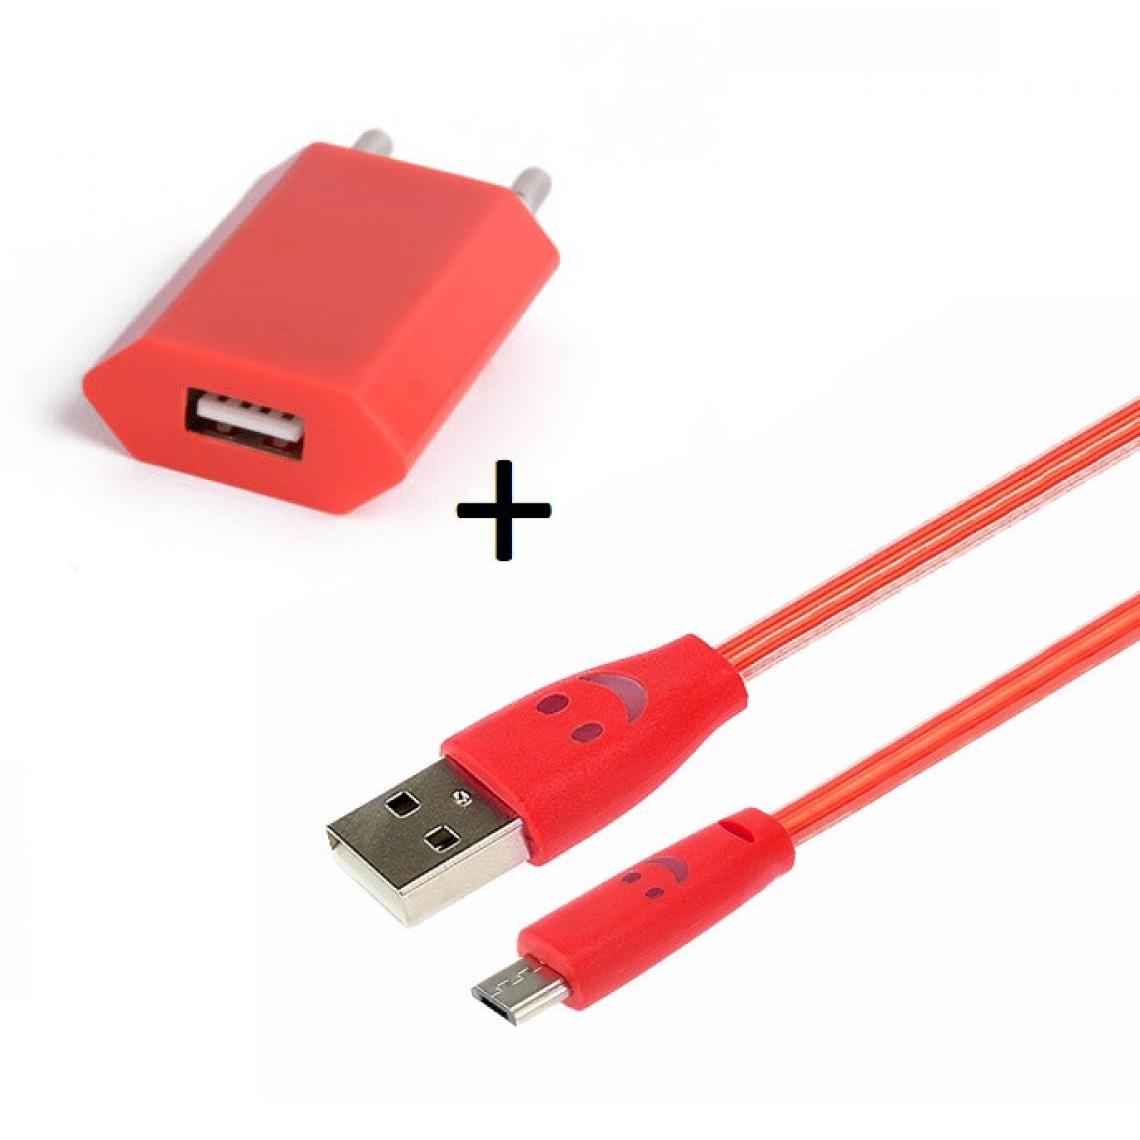 Shot - Pack Chargeur pour HUAWEI P smart 2019 Smartphone Micro USB (Cable Smiley LED + Prise Secteur USB) Android (ROUGE) - Chargeur secteur téléphone